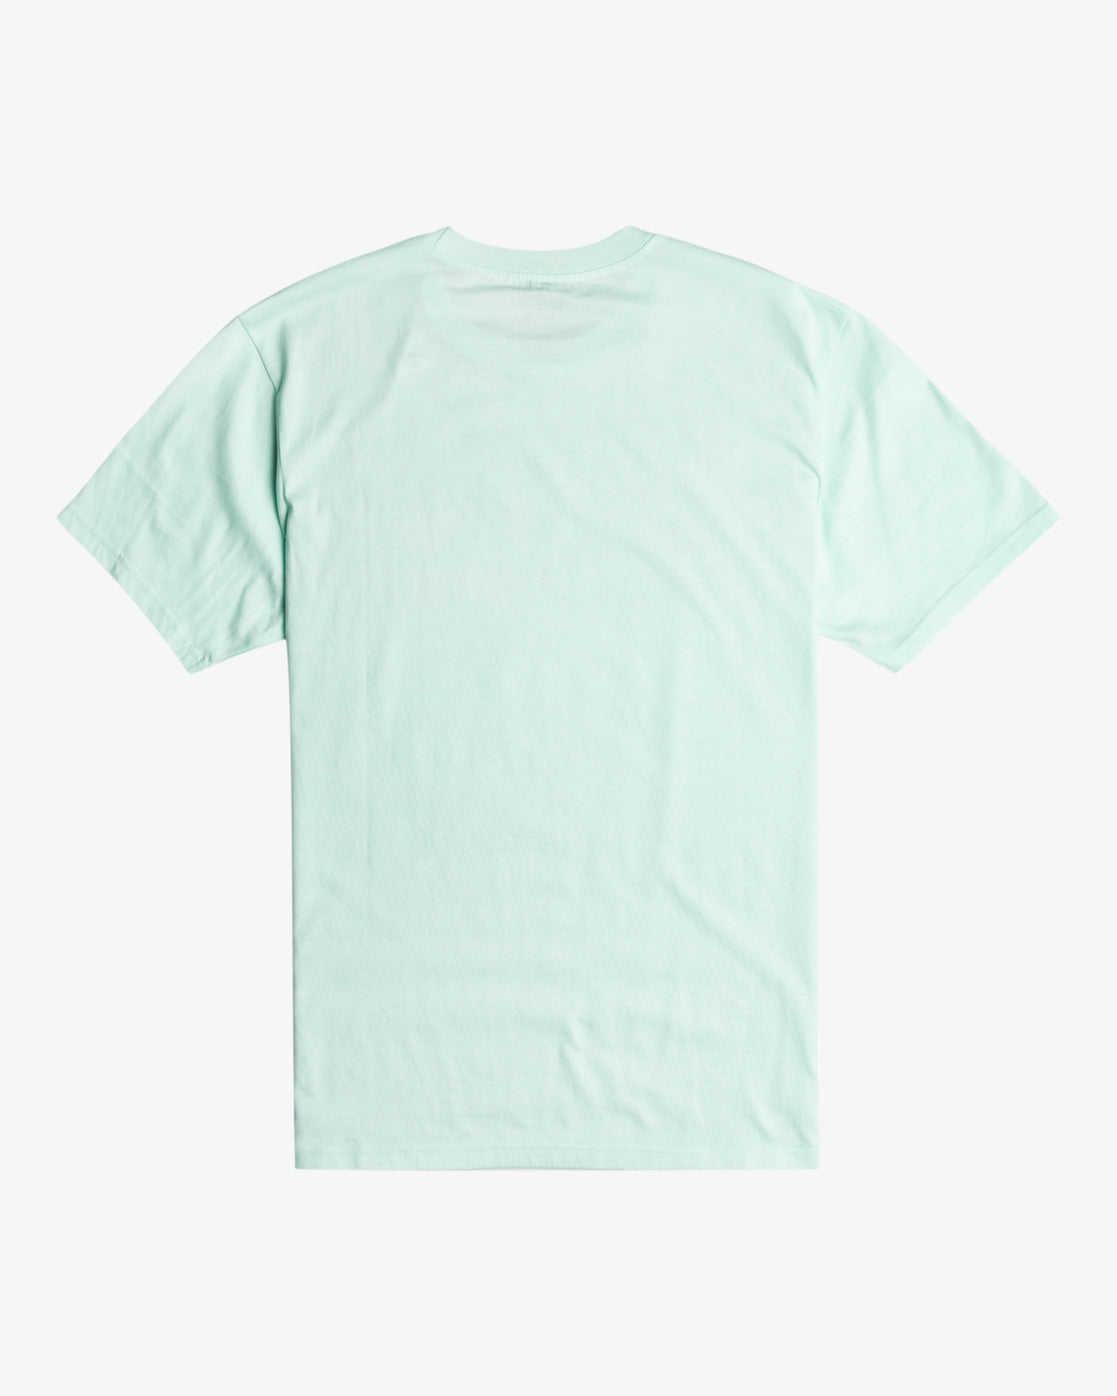 Billabong Inversed T-Shirt in Seaglass